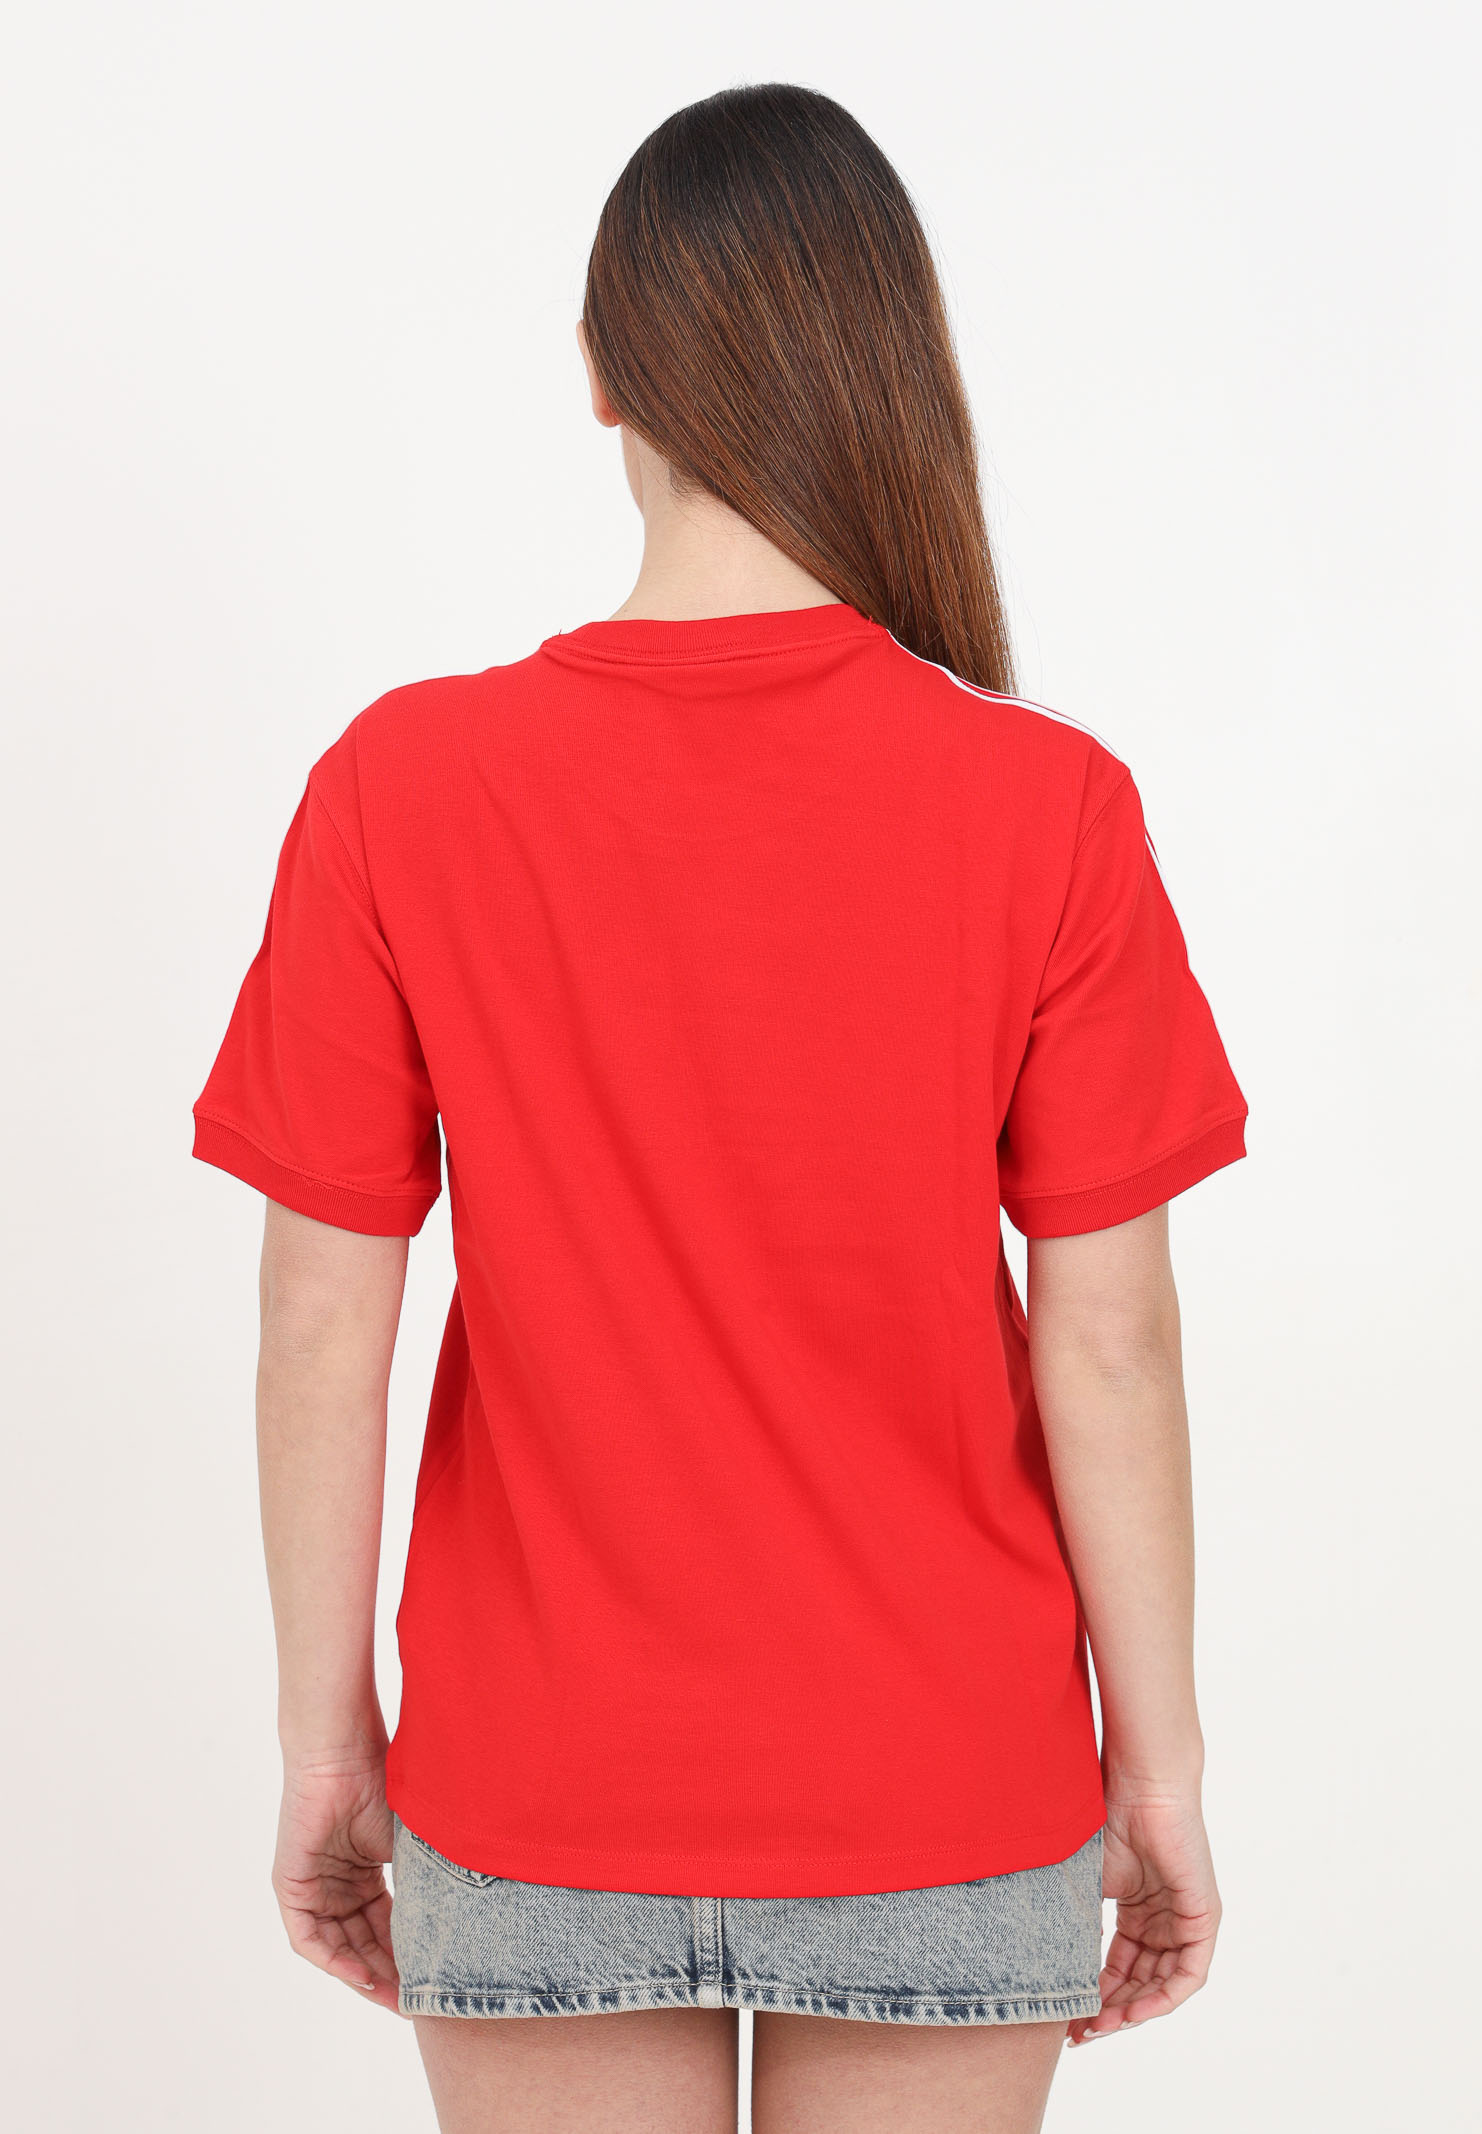 T-shirt donna rossa con tre strisce bianche - ADIDAS ORIGINALS - Pavidas